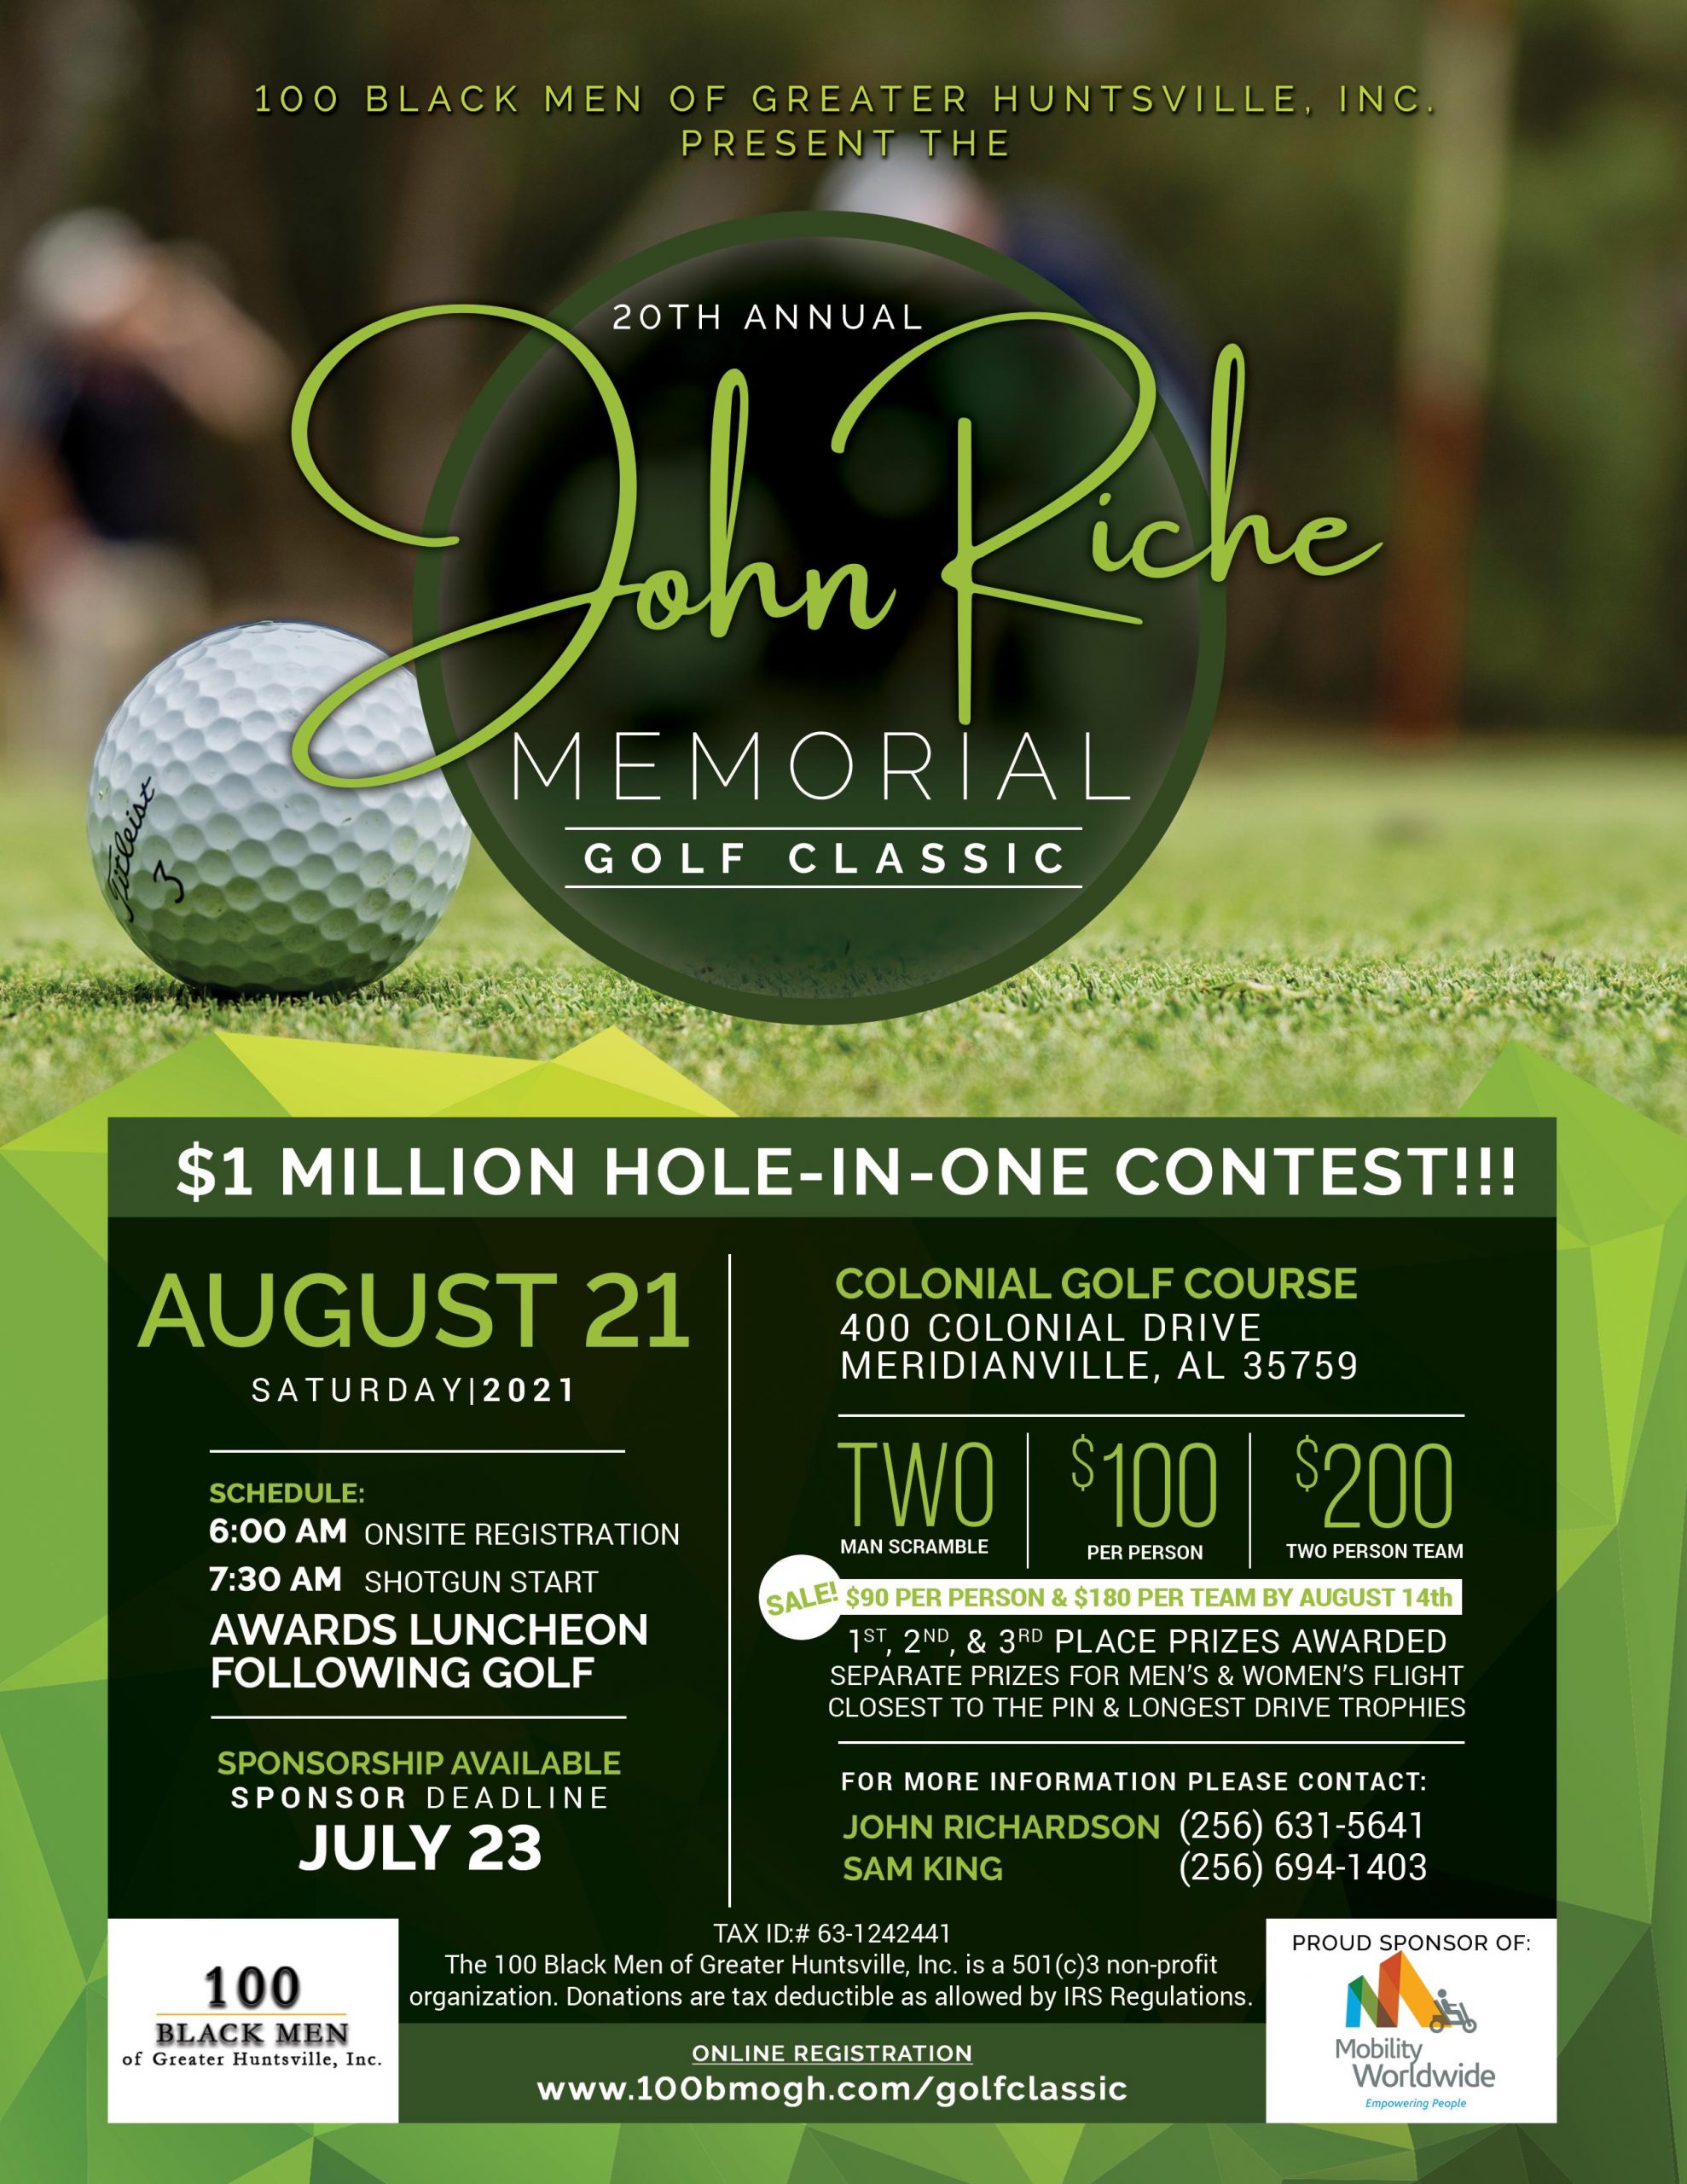 20th Annual John Riche Memorial Golf Classic